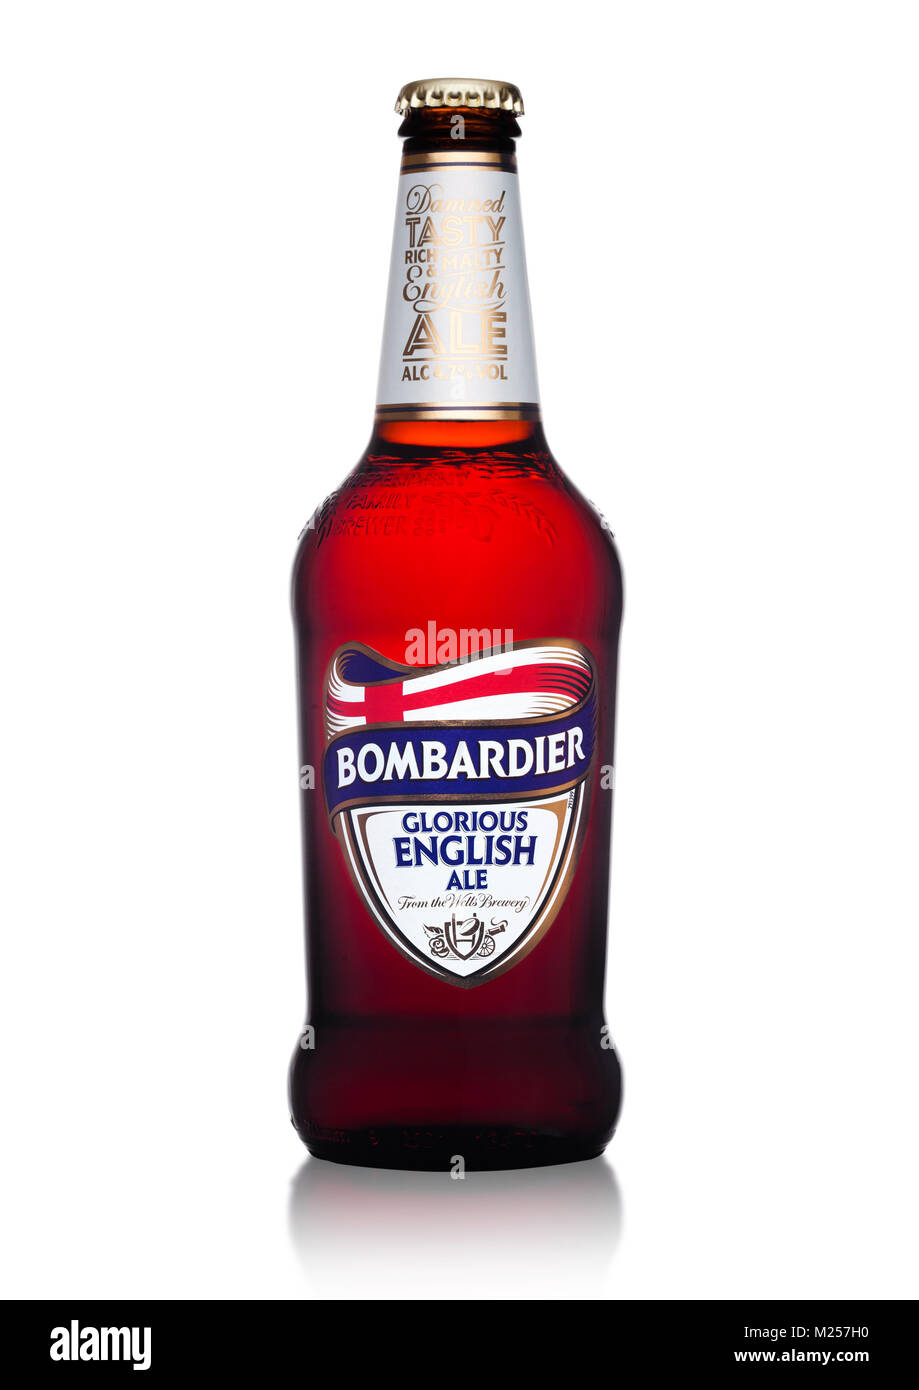 LONDON, UK - FEBRUARY 02, 2018: Cold bottle of Bombardier glorious english ale beer on white background. Stock Photo